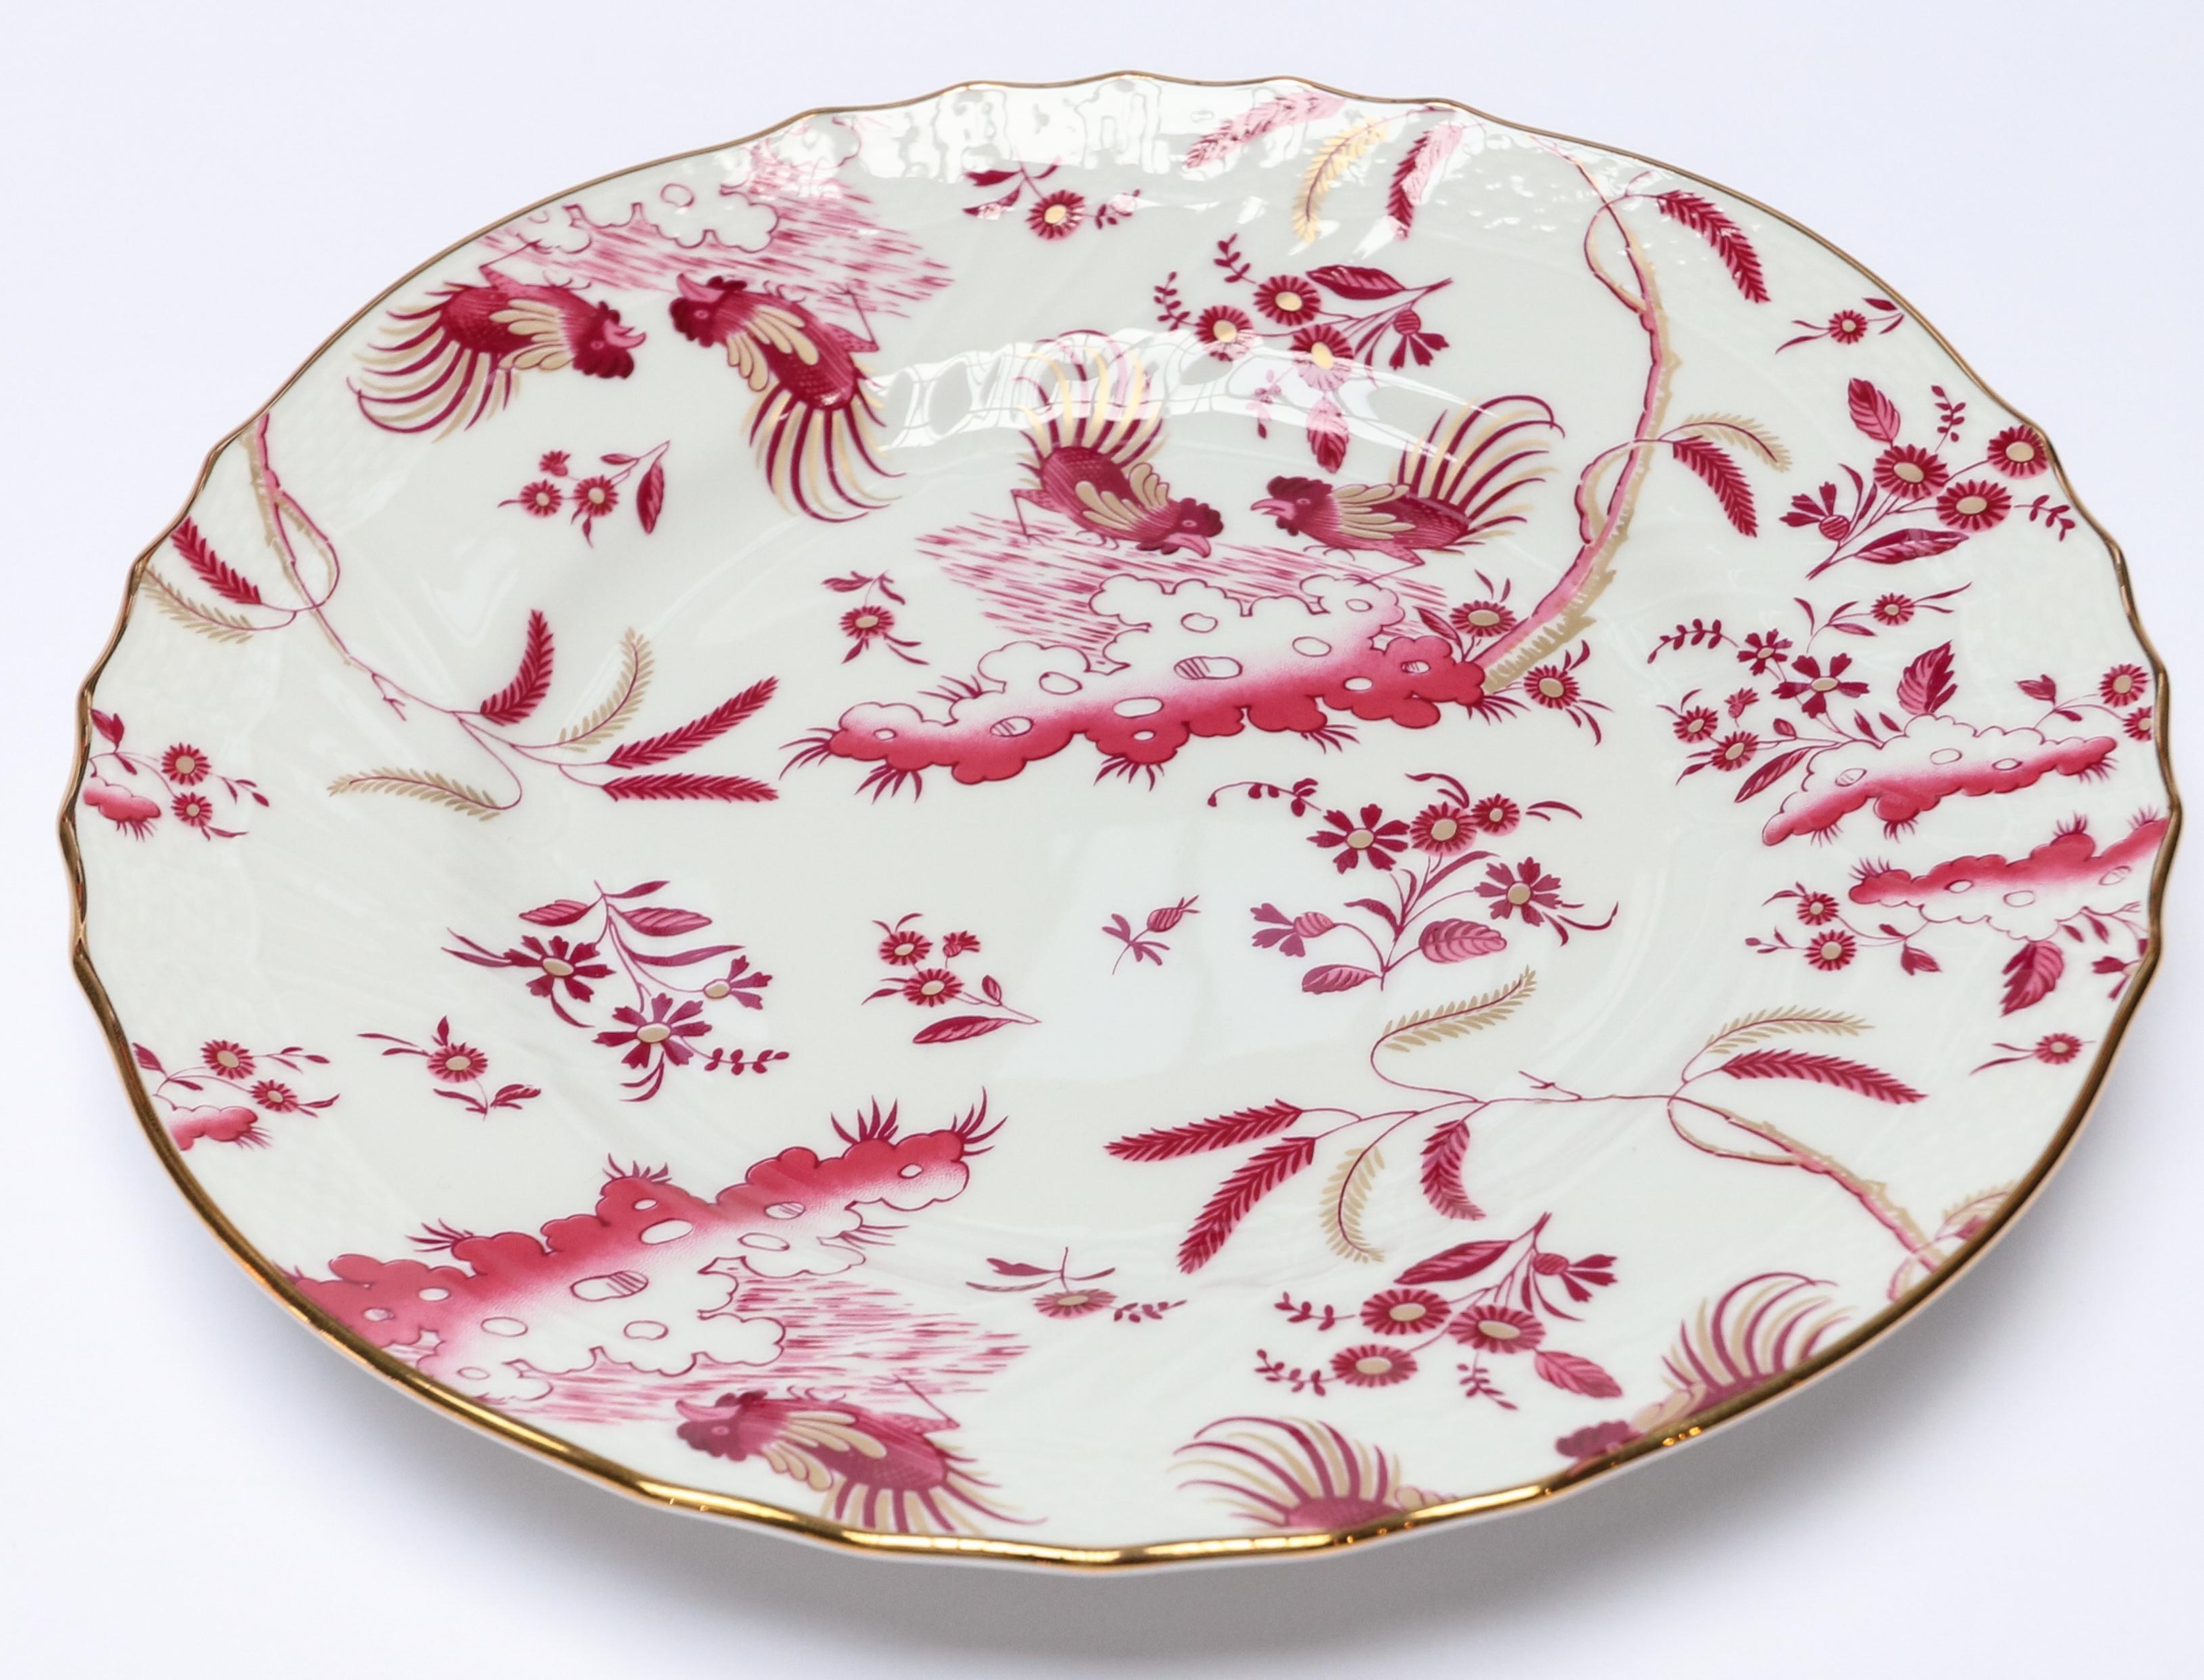 Richard Ginori Oro di Doccia magenta pink dessert plate in the Antico Doccia shape measure 21.5cm in diameter.
 